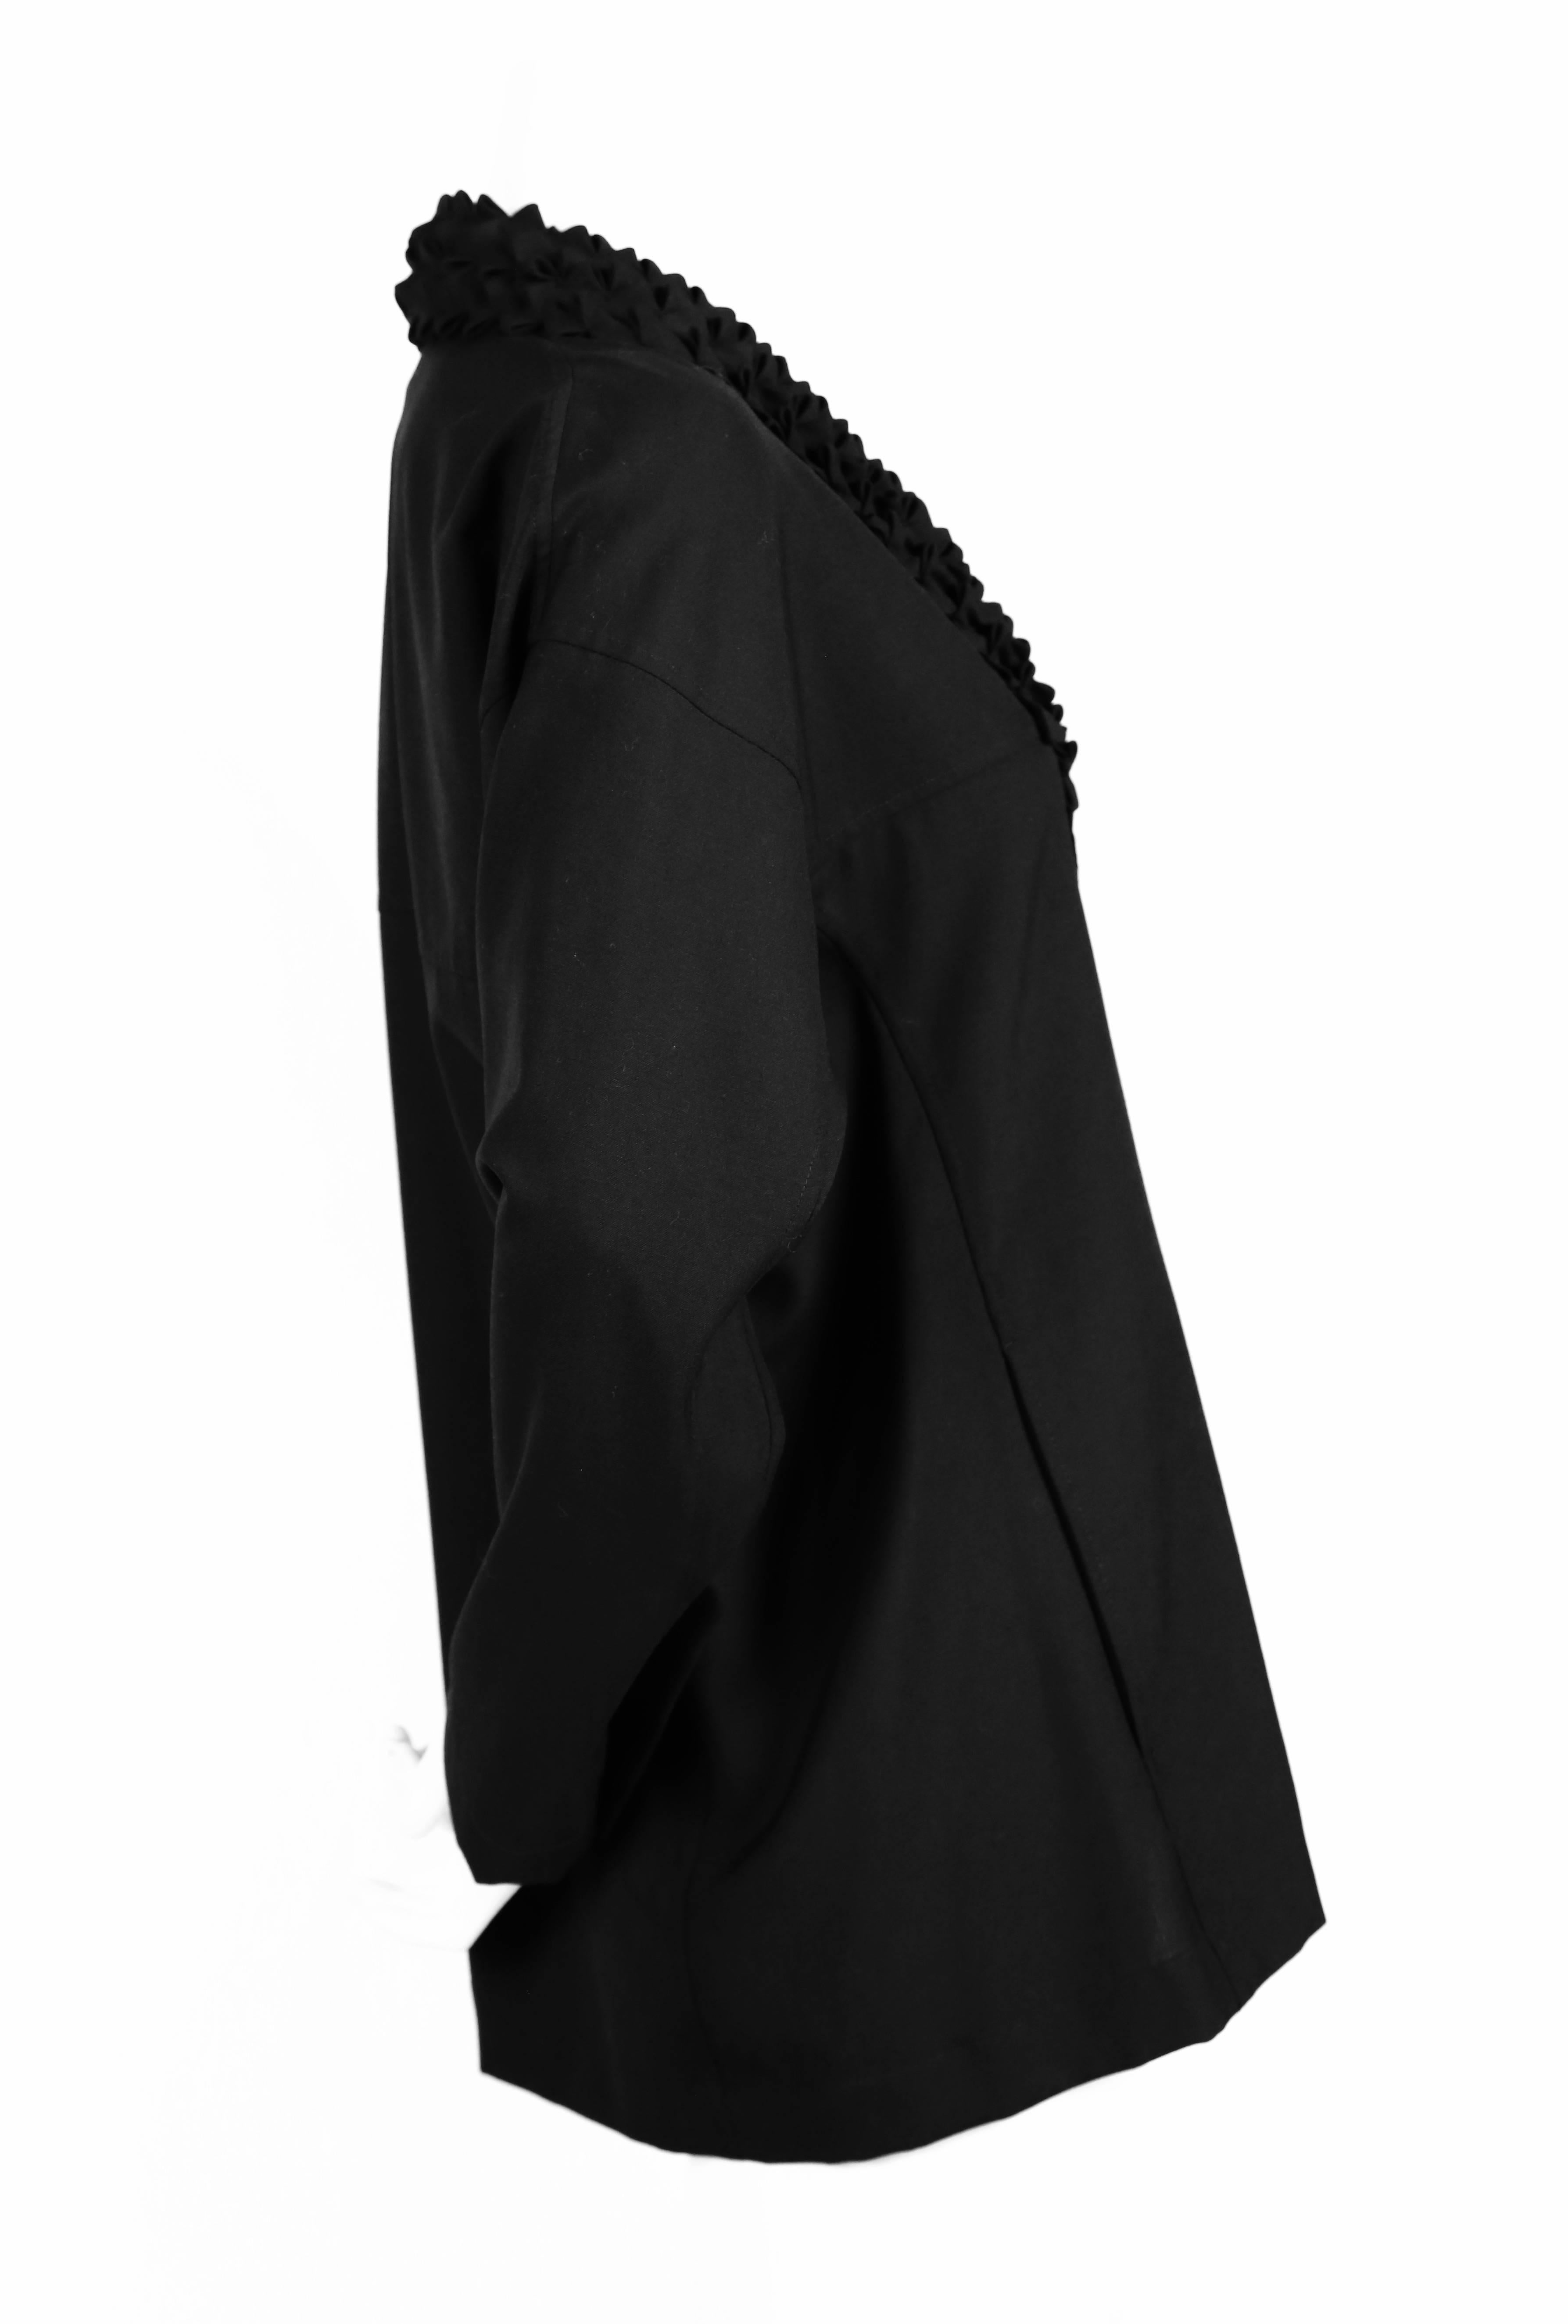 Black ISSEY MIYAKE black wool & cashmere jacket with origami collar